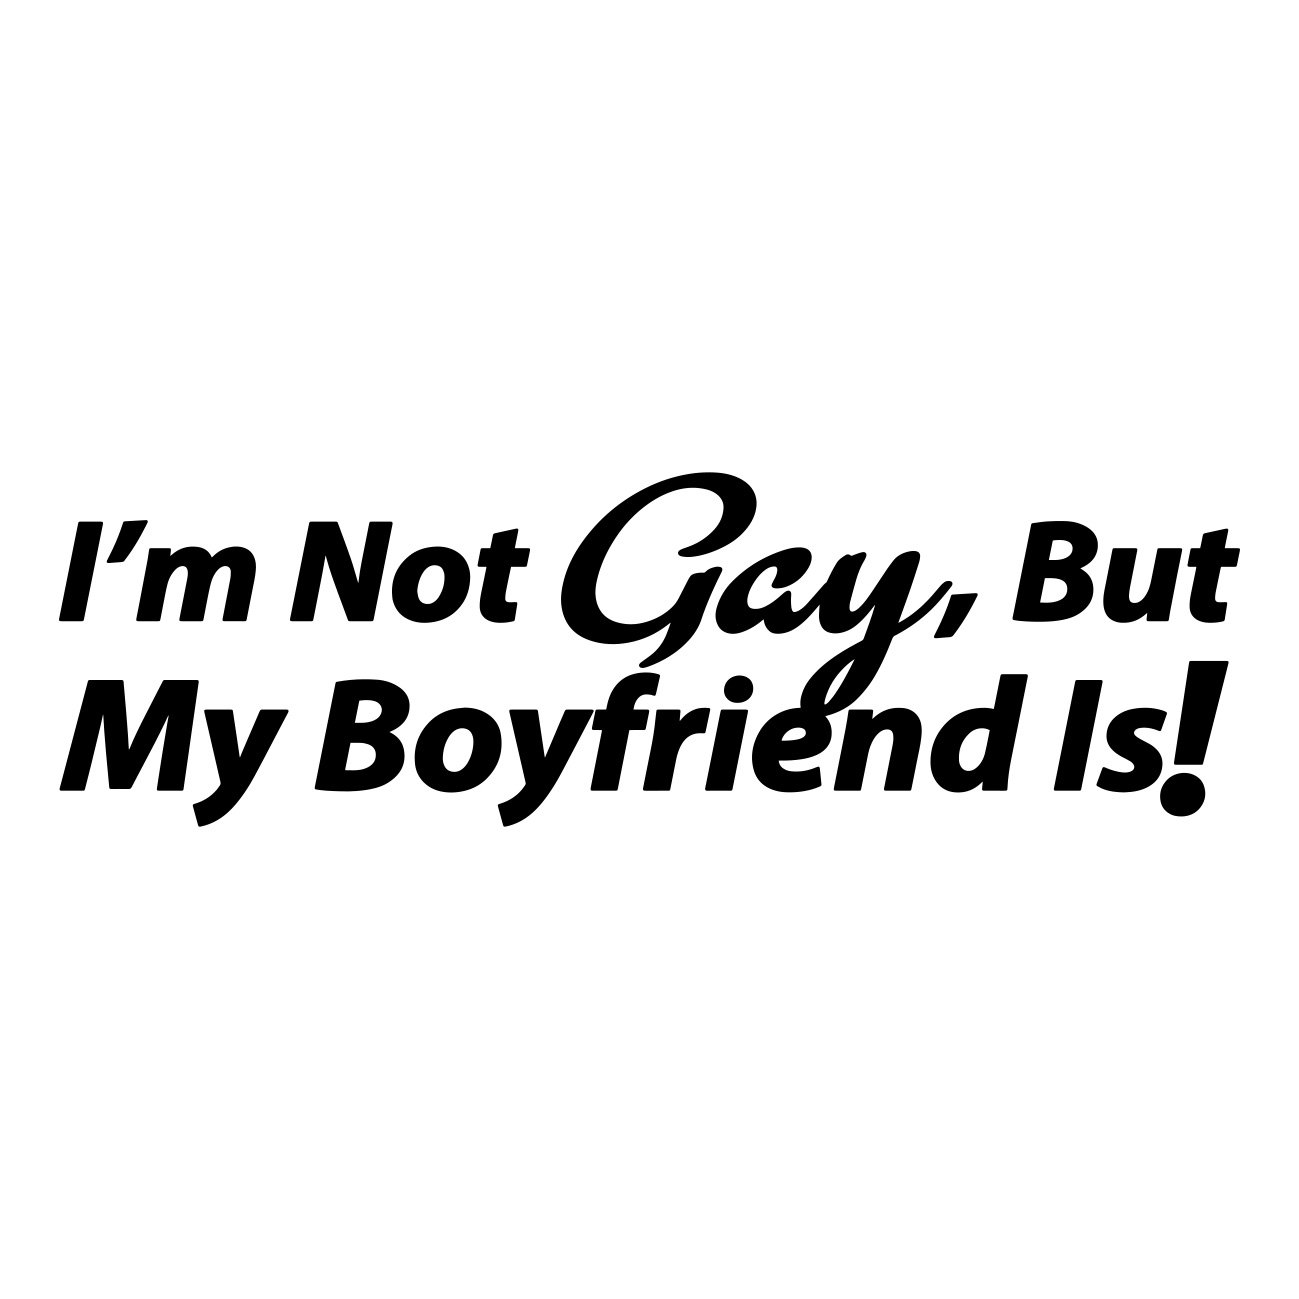 im not gay but my boyfriend is